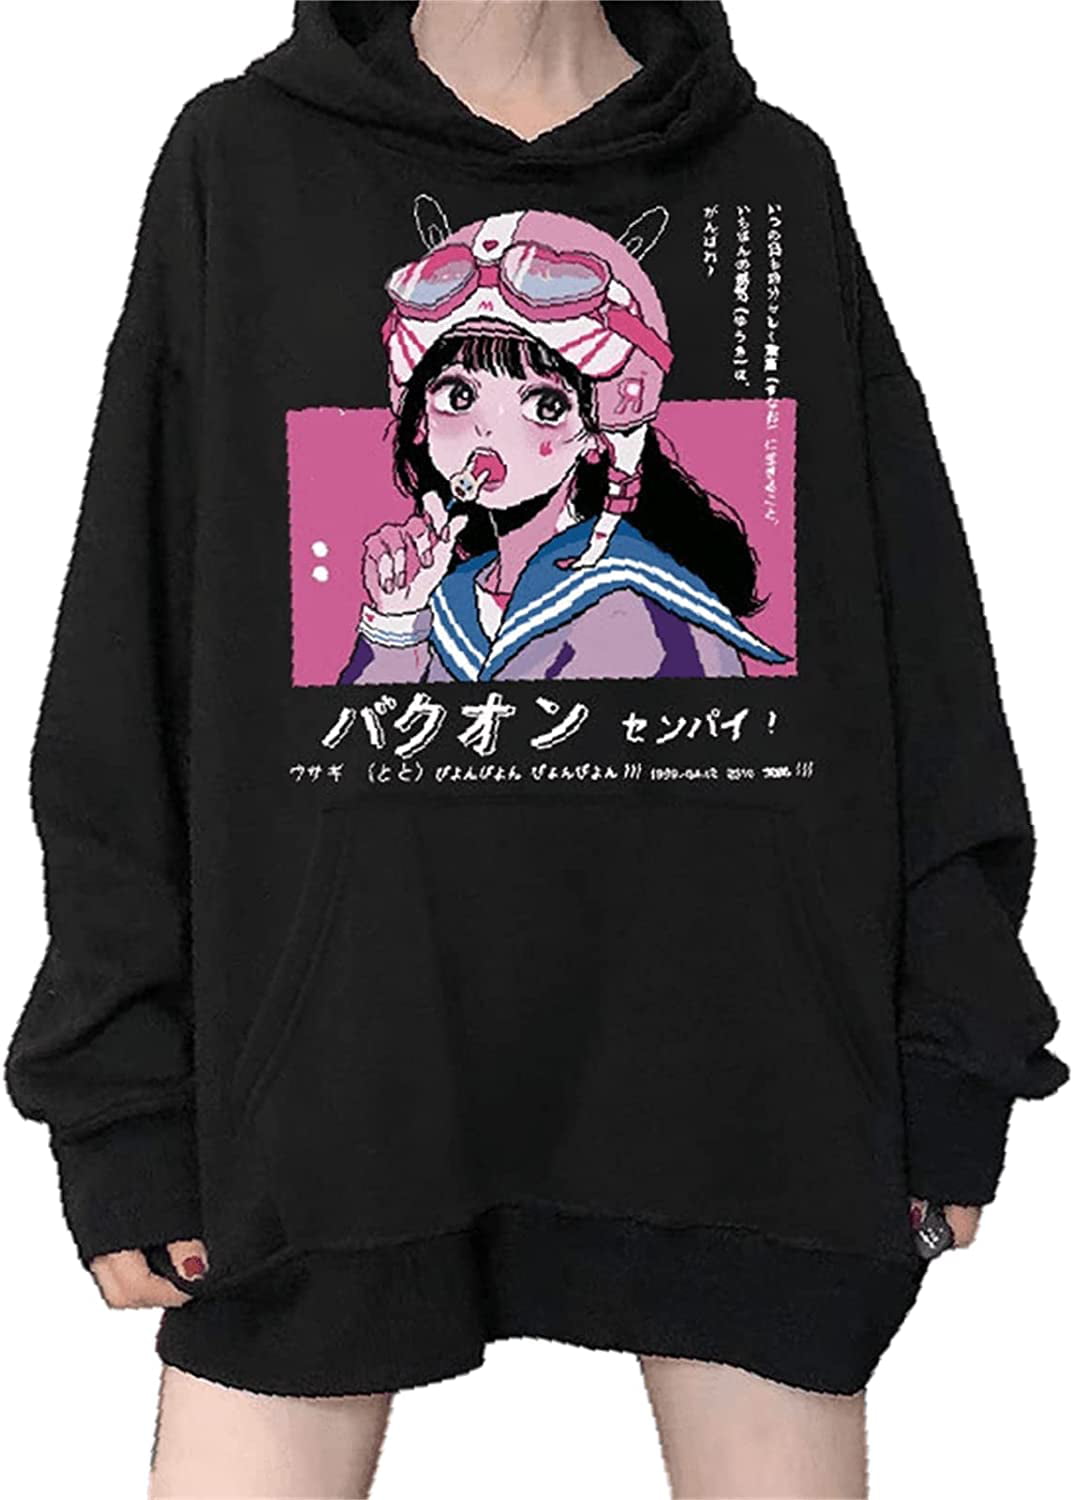 fondlouse174 anime cat girl wearing hoodie